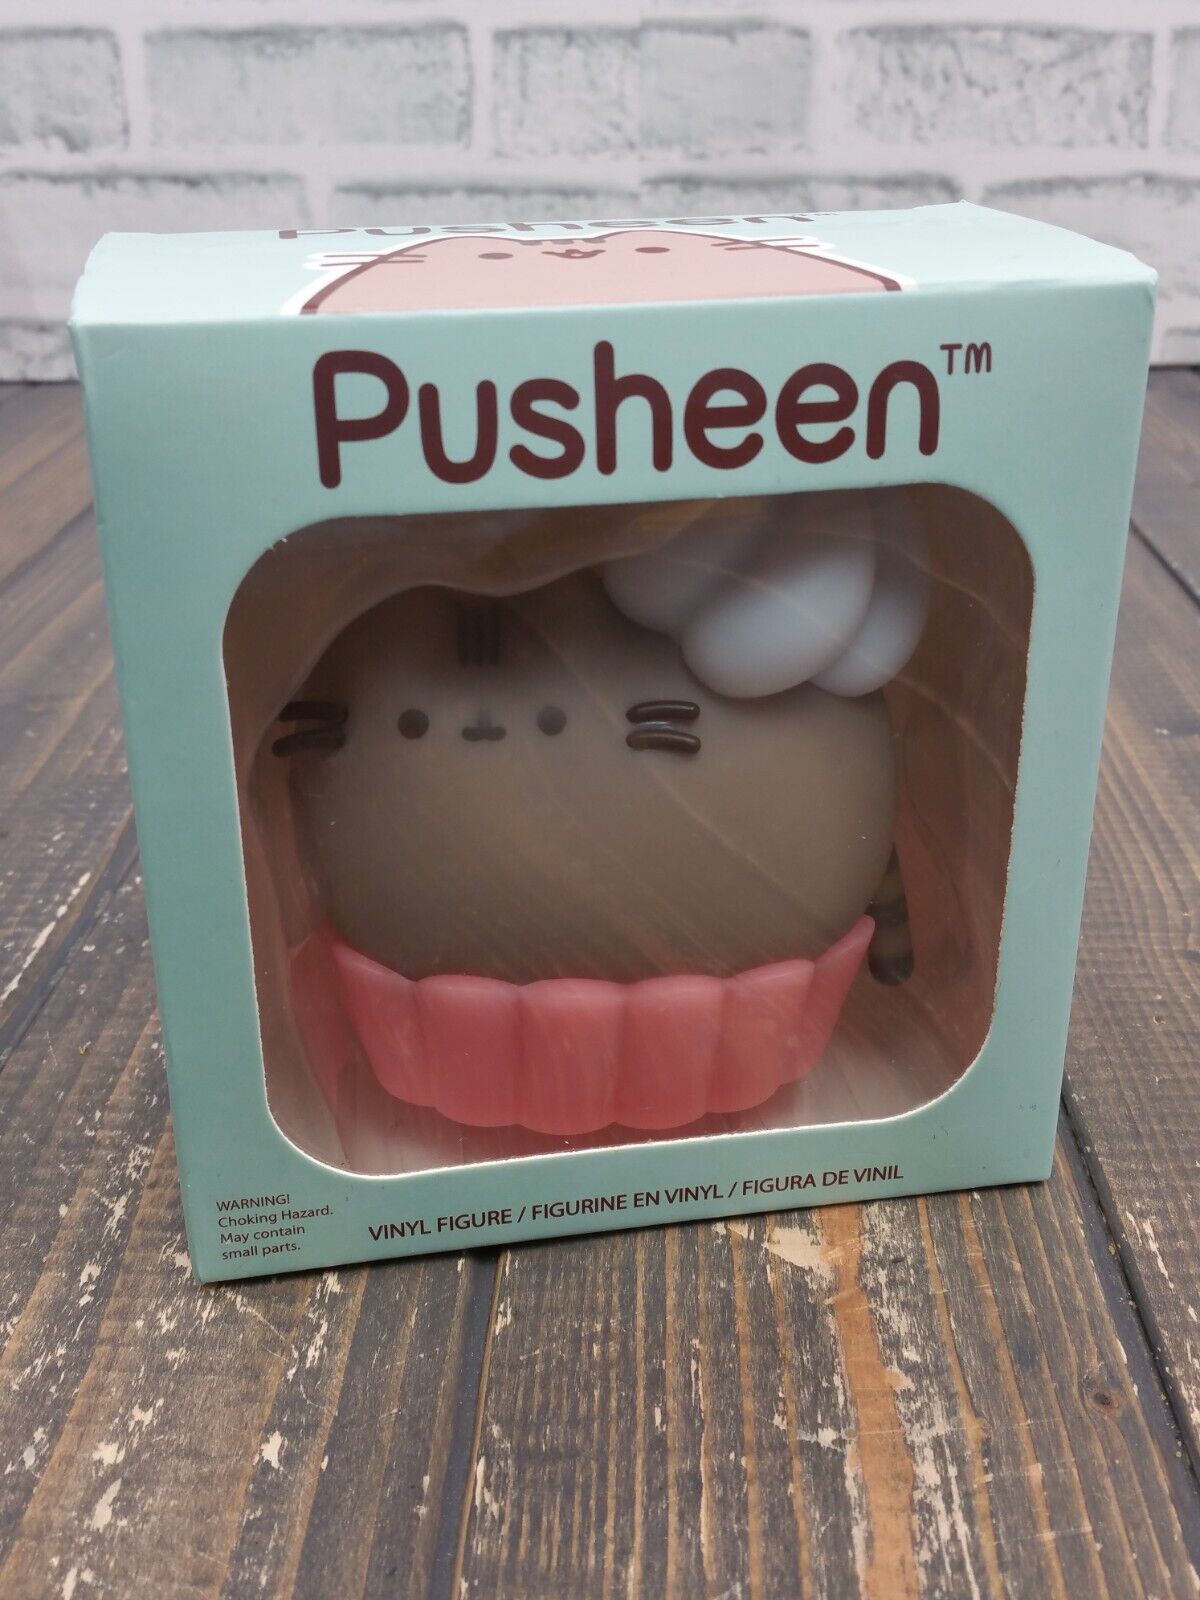 Pusheen Box Exclusive WINTER 2019 - Vinyl Figure Cupcake with Whip Cream On Top